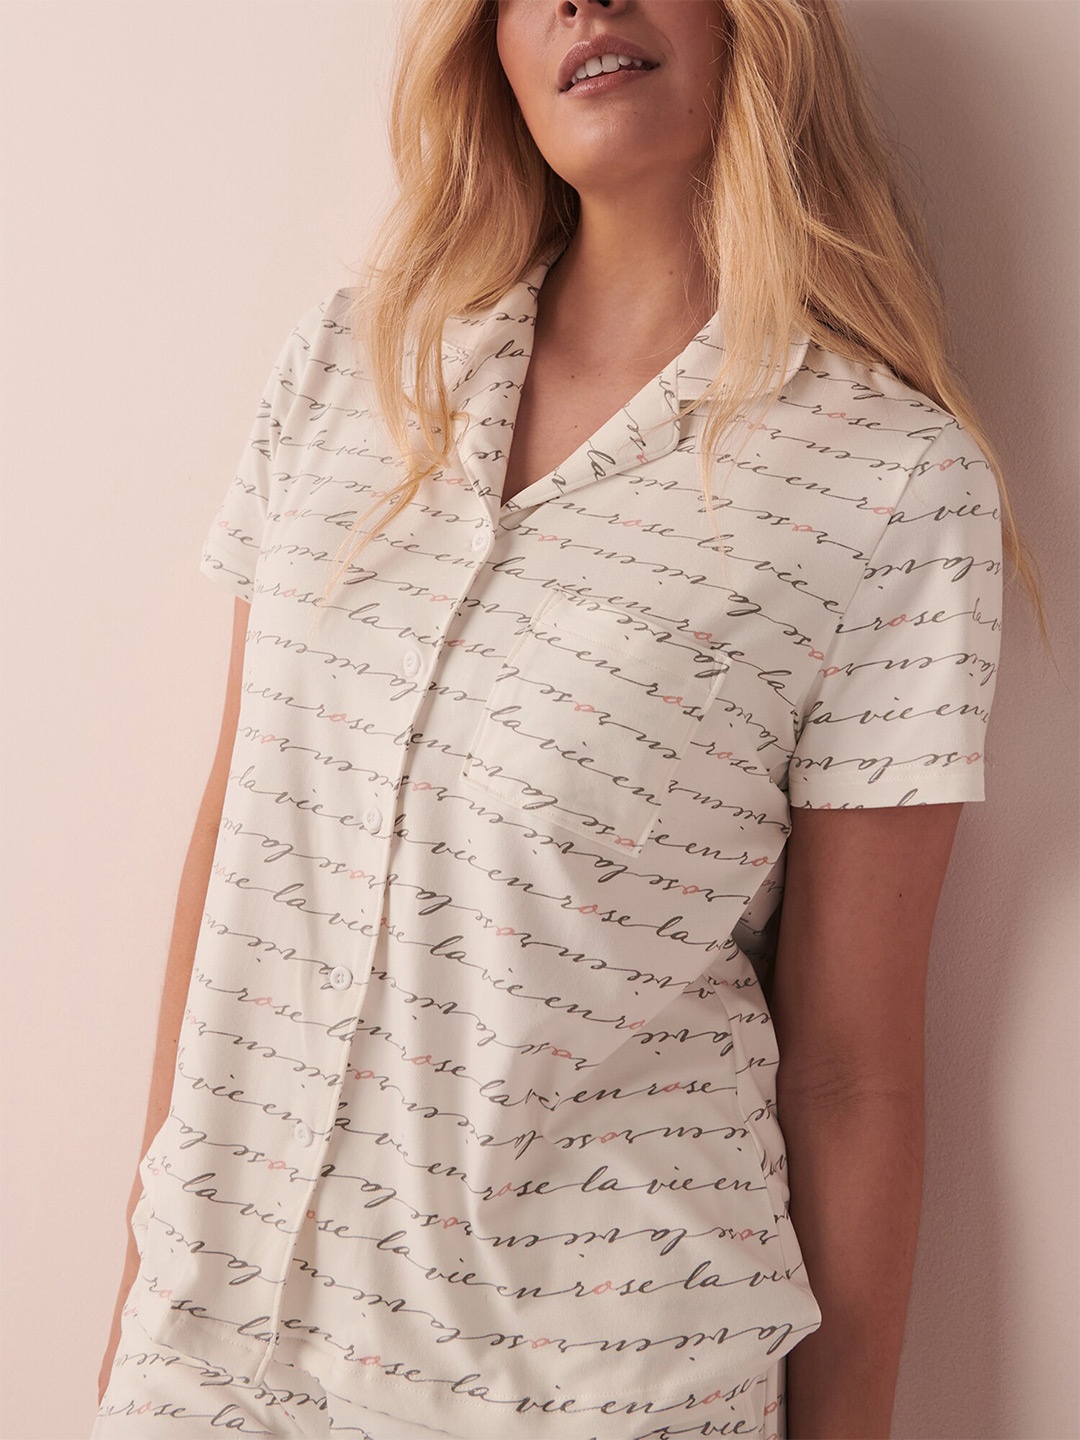 

La Vie en Rose Typography Printed Shirt Style Top, White